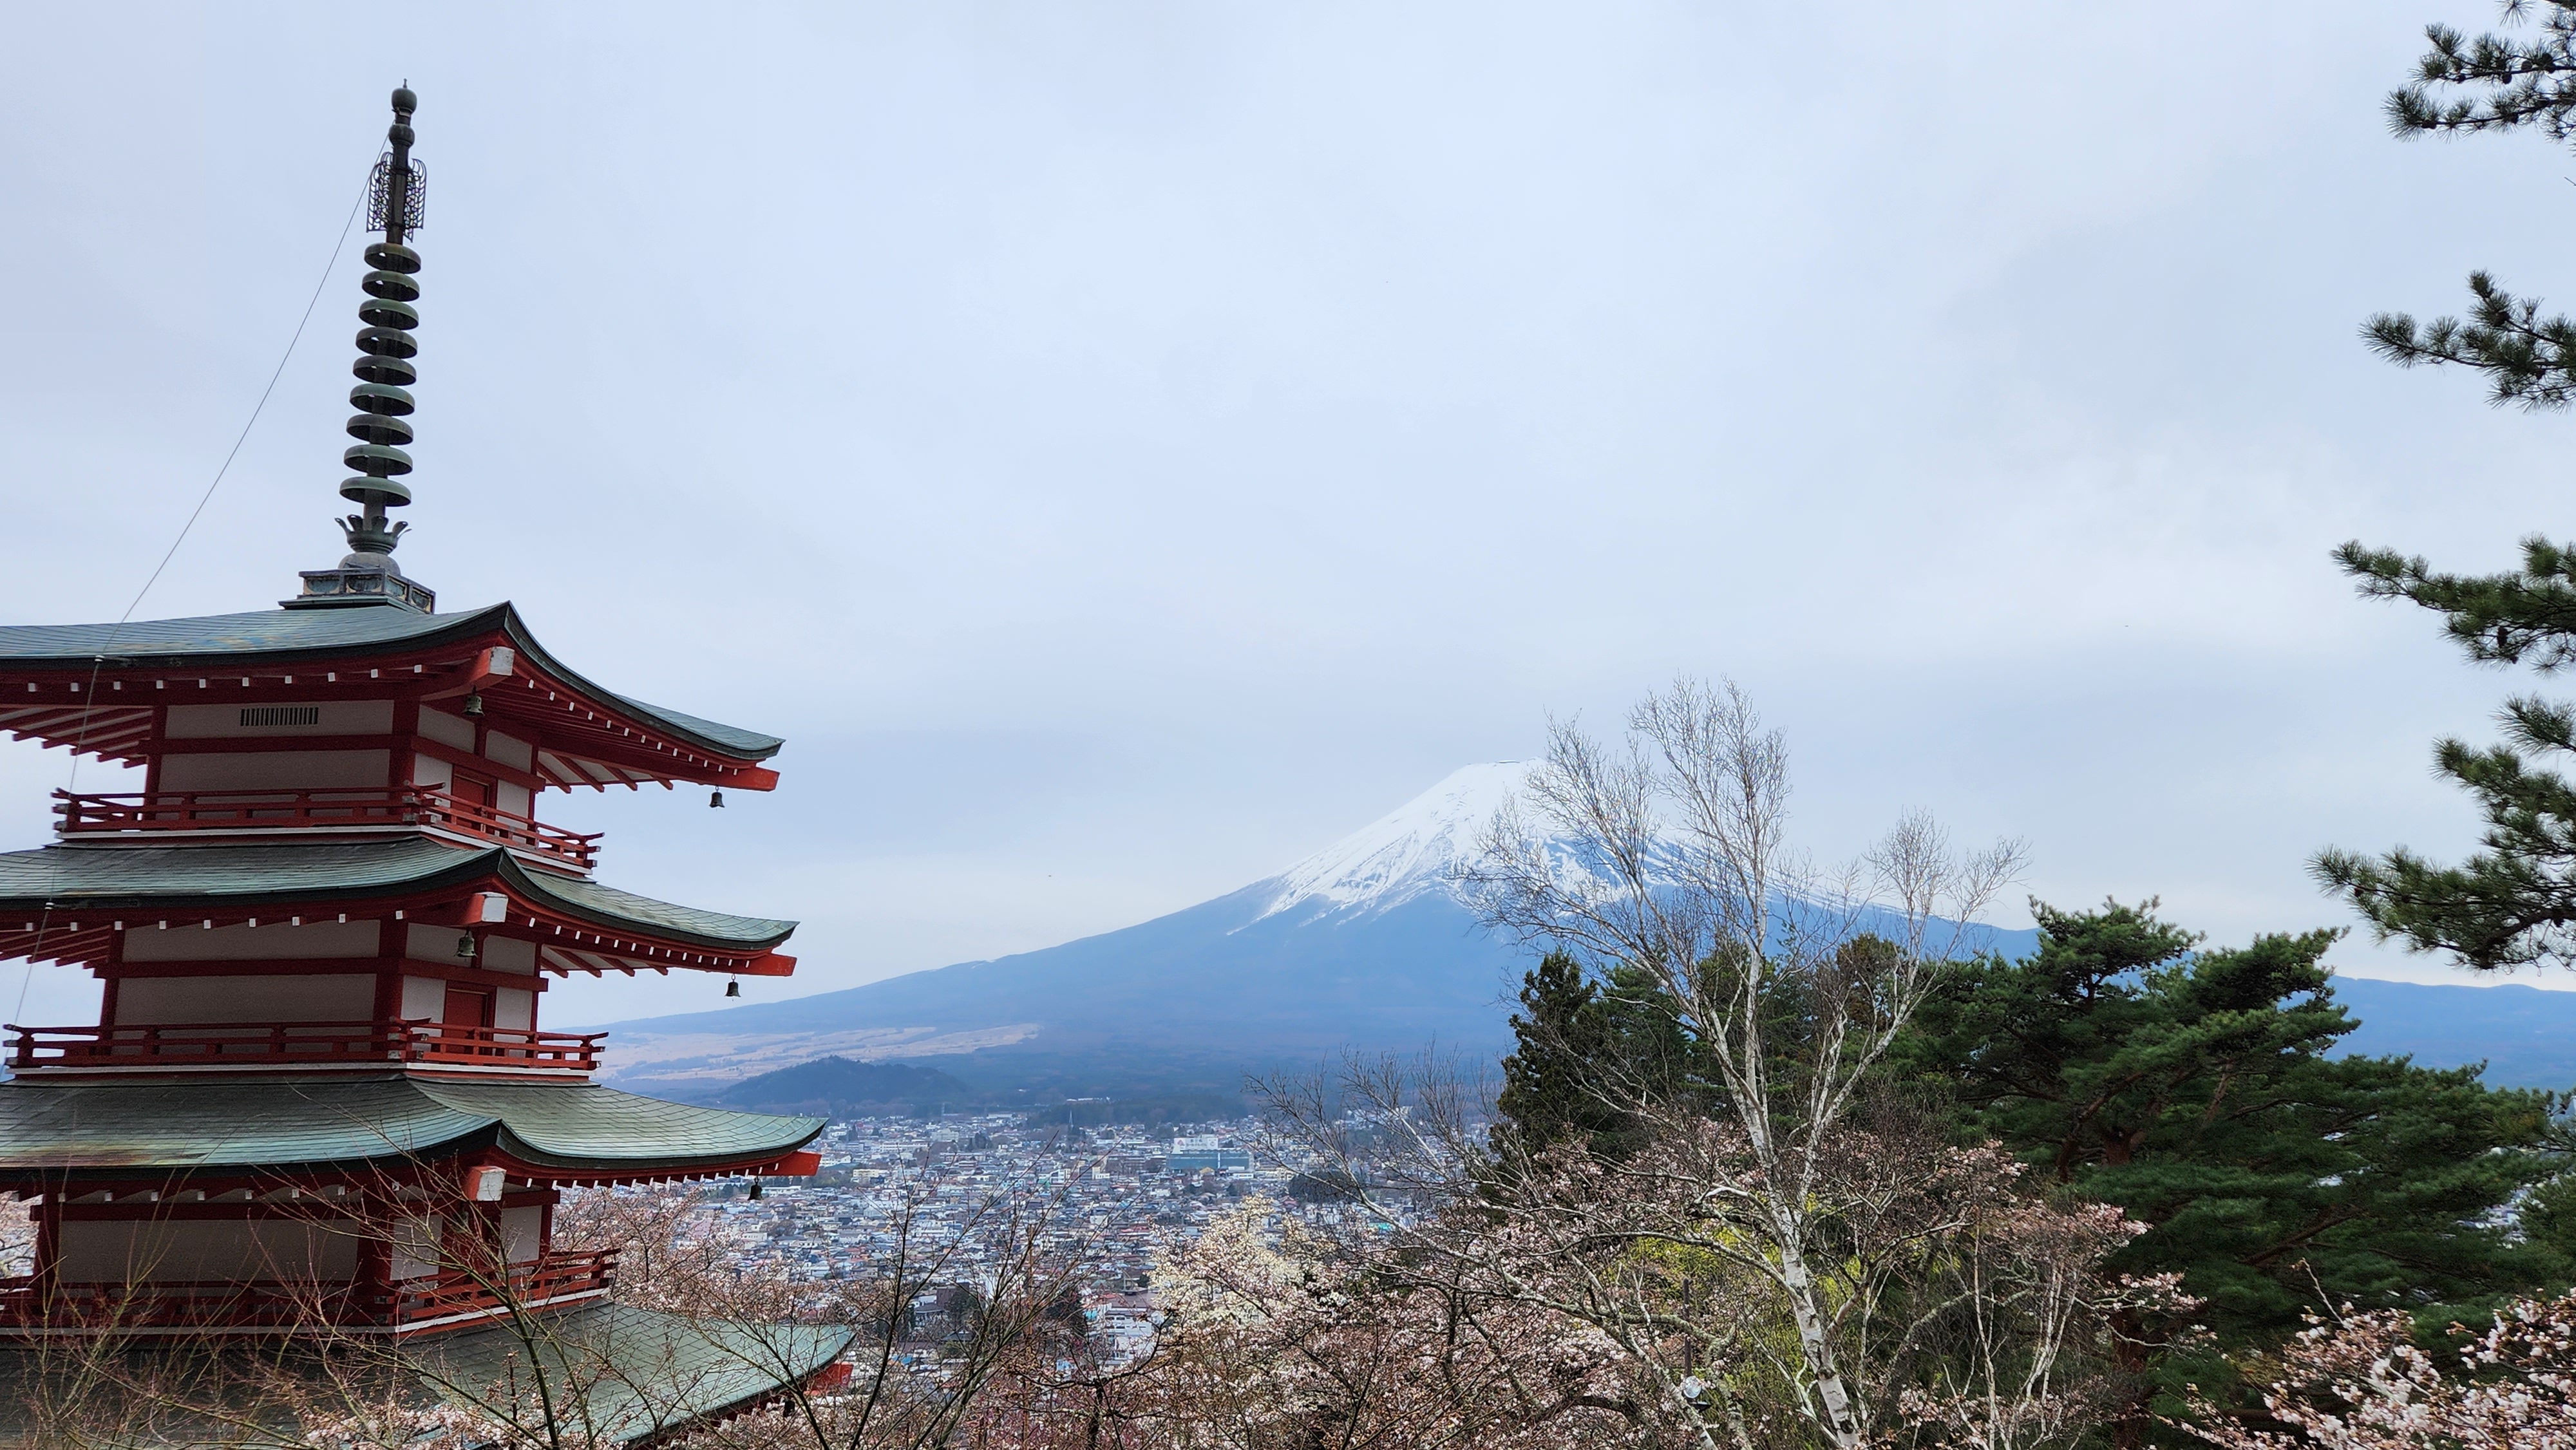 Mount Fuji in Japan | KILROY